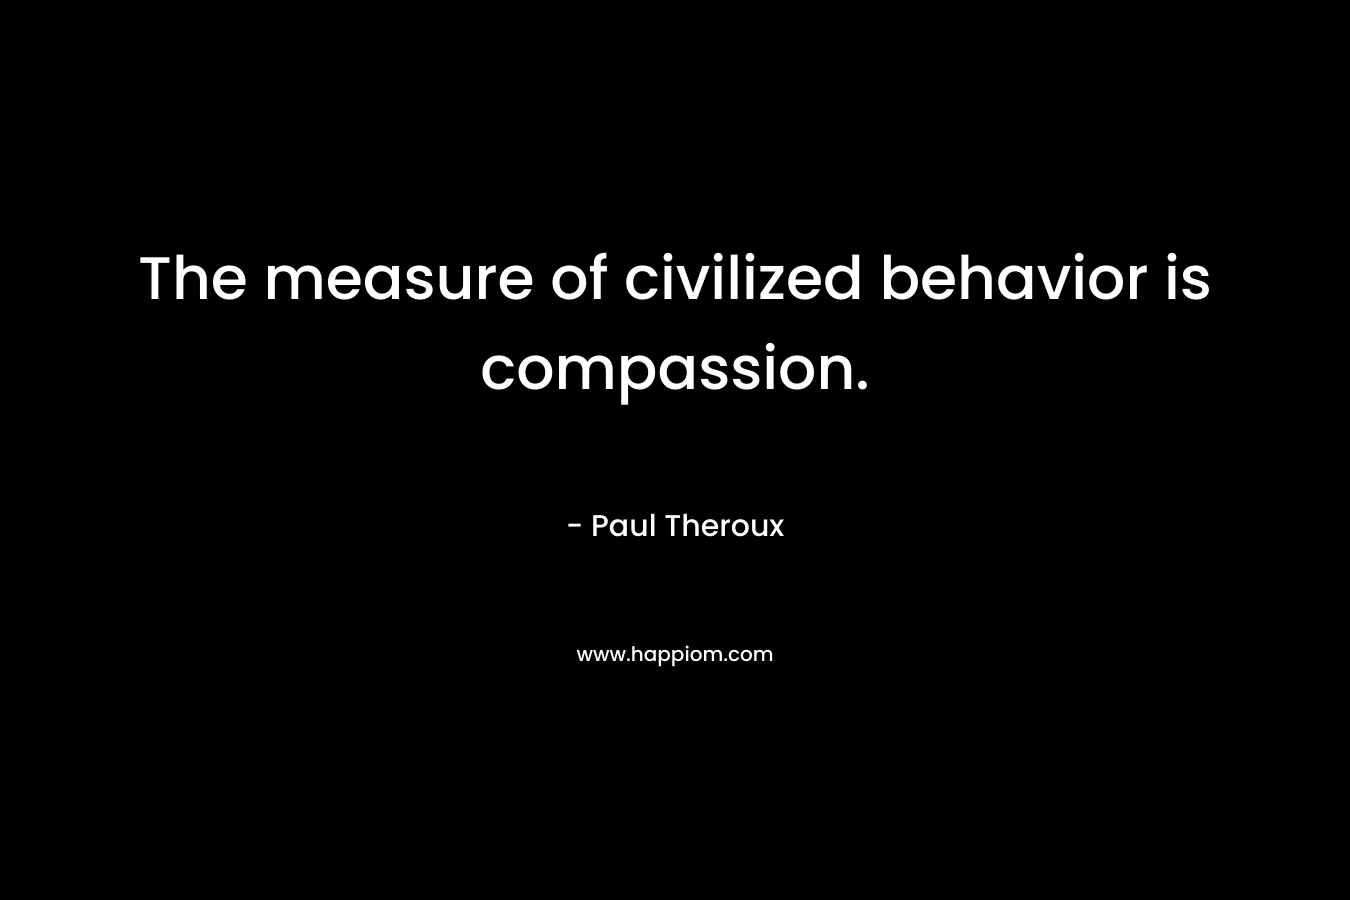 The measure of civilized behavior is compassion.